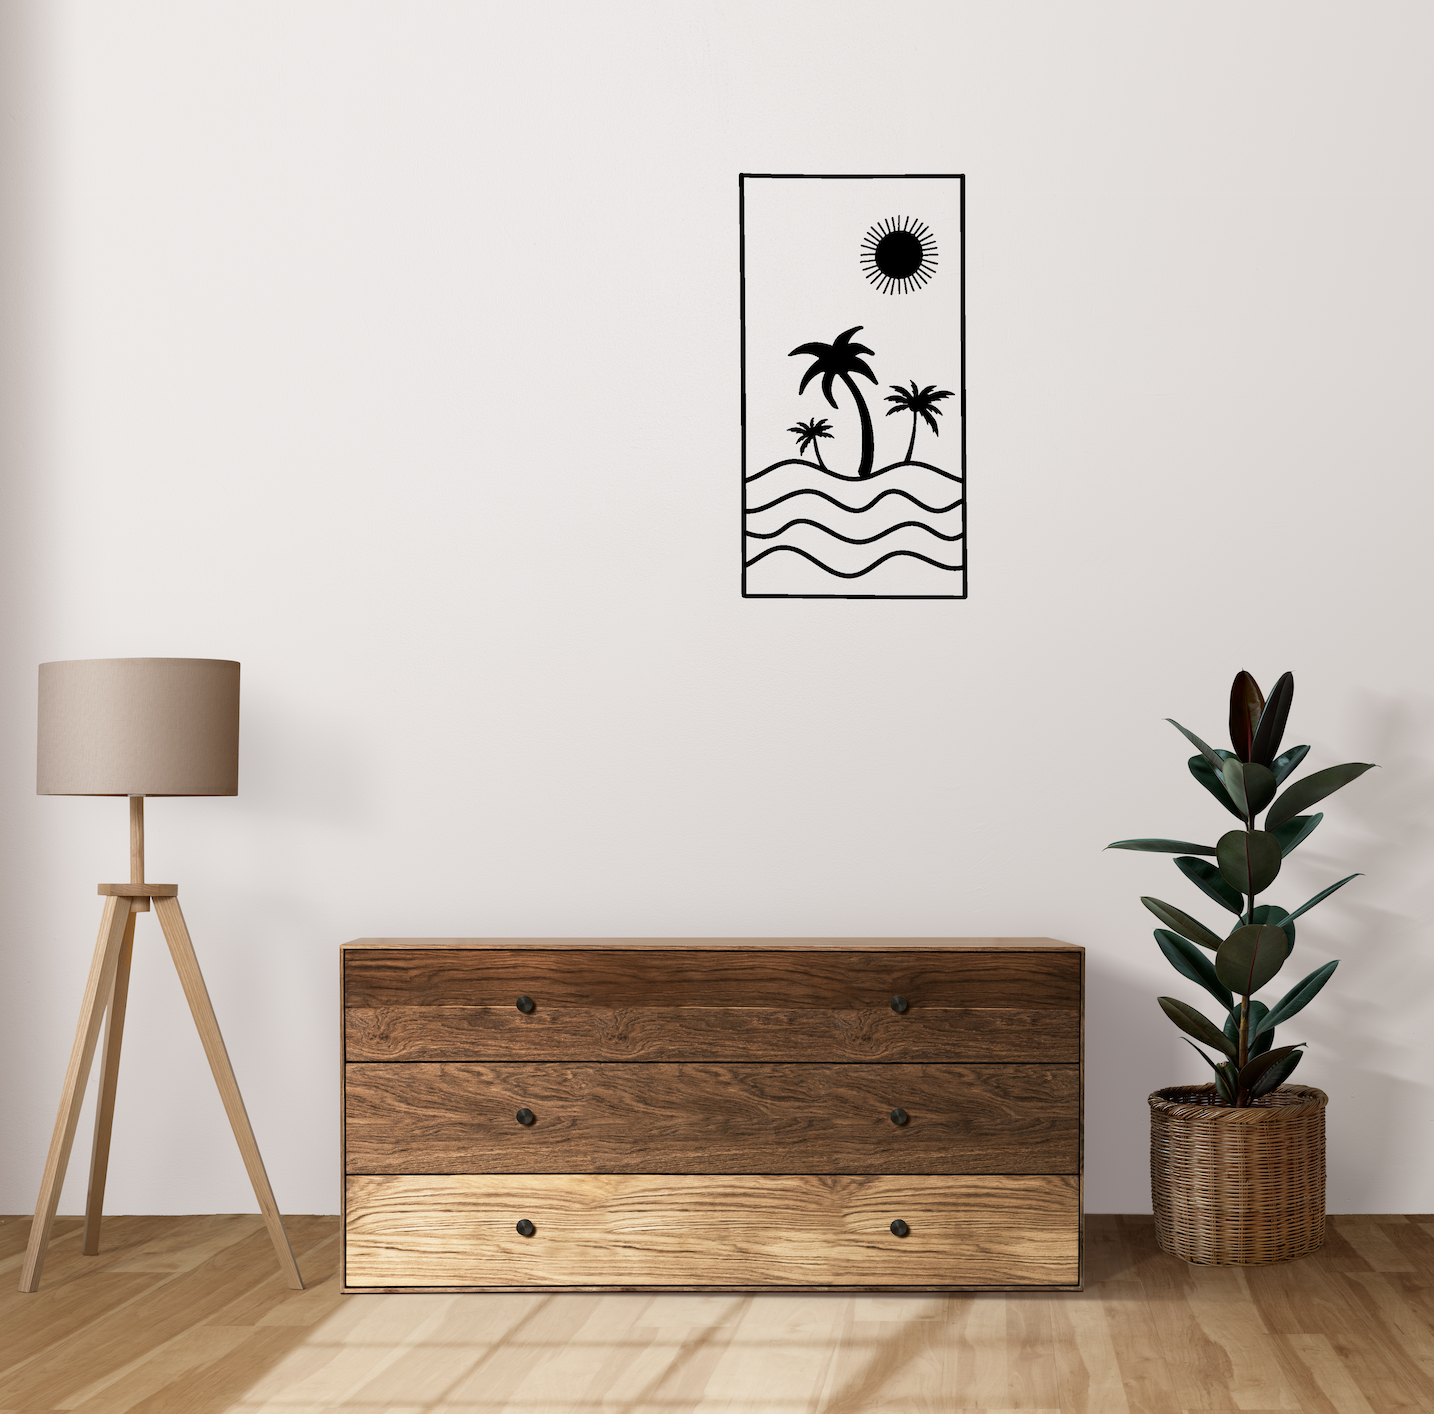 Bohemian Beach Ocean Luxury Modern High Quality Decal Sticker Boho Wall Art for Home House Rental Apartment Decor